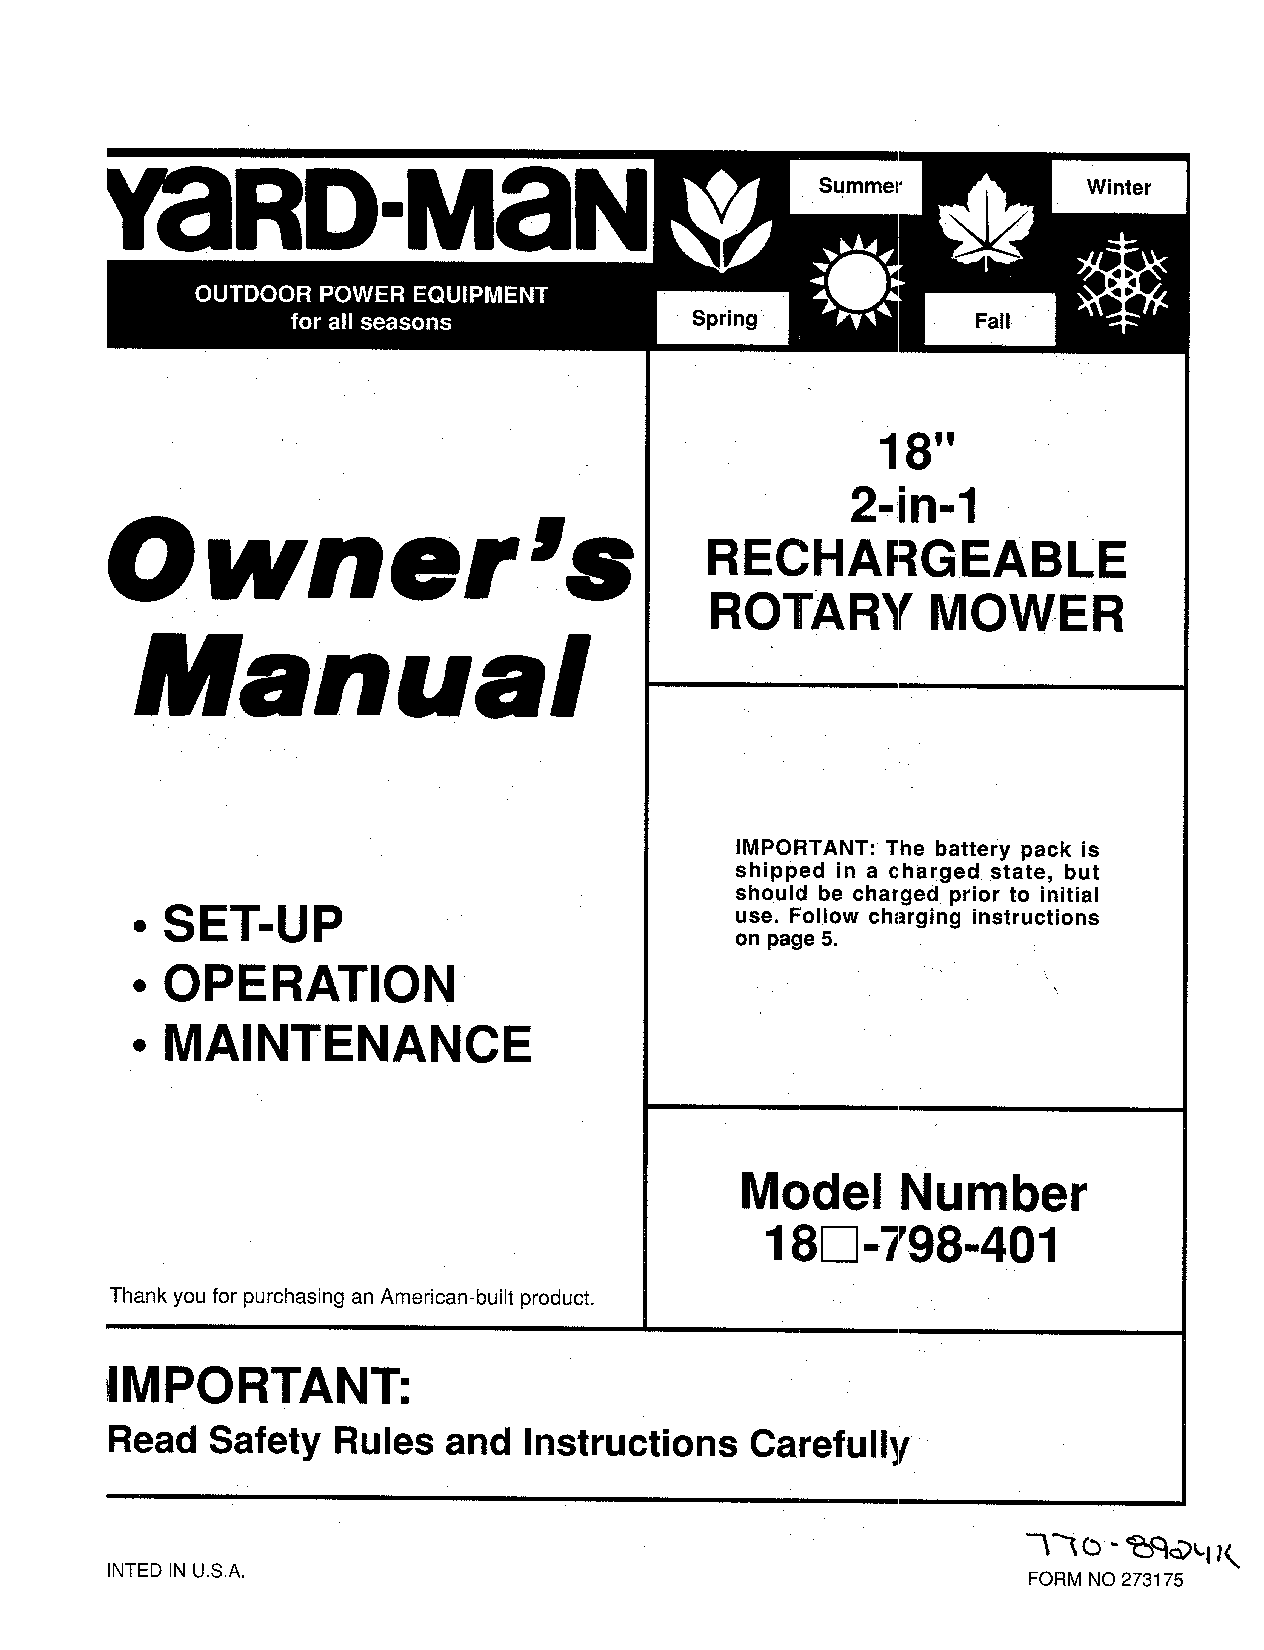 Yard-Man 18-798-401 User Manual